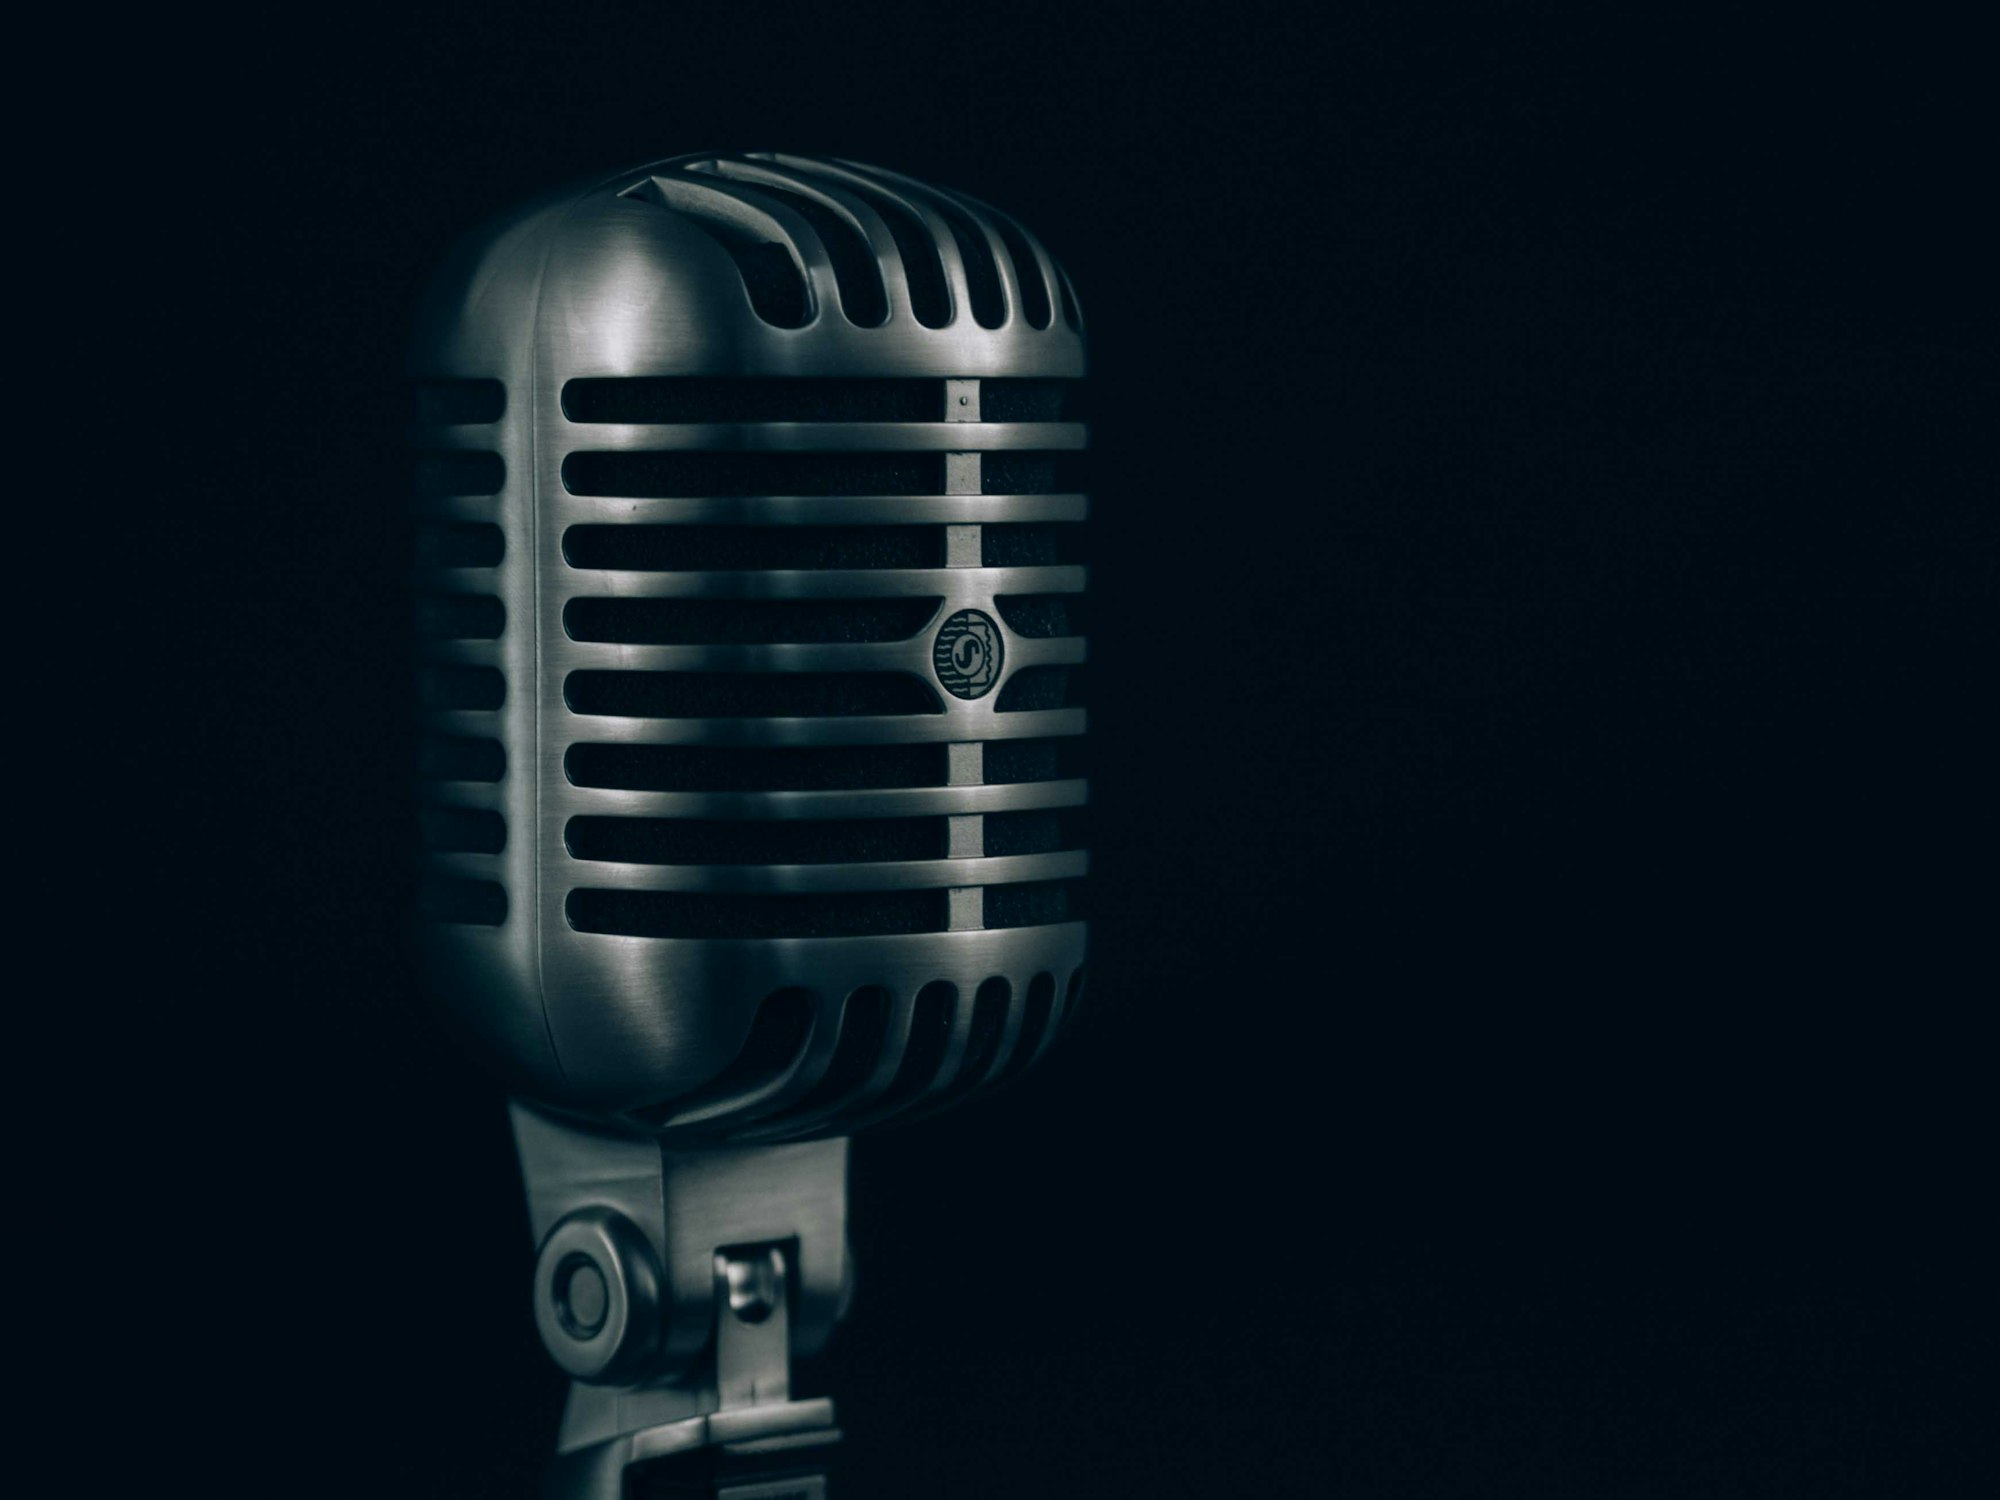 Elegant steel microphone against a black background